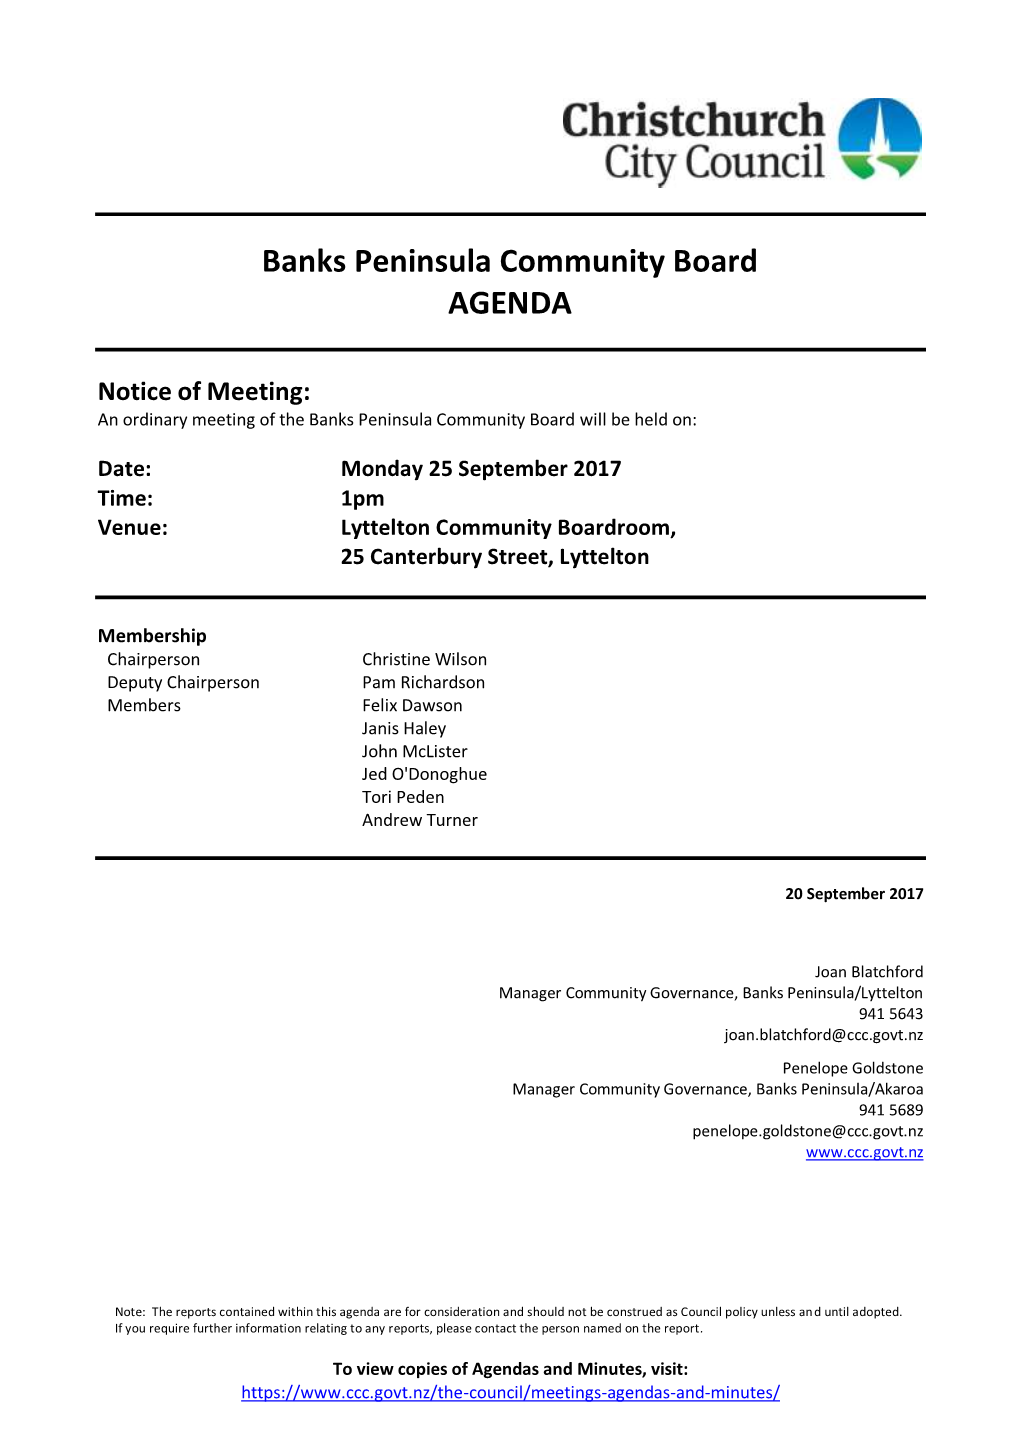 Banks Peninsula Community Board AGENDA